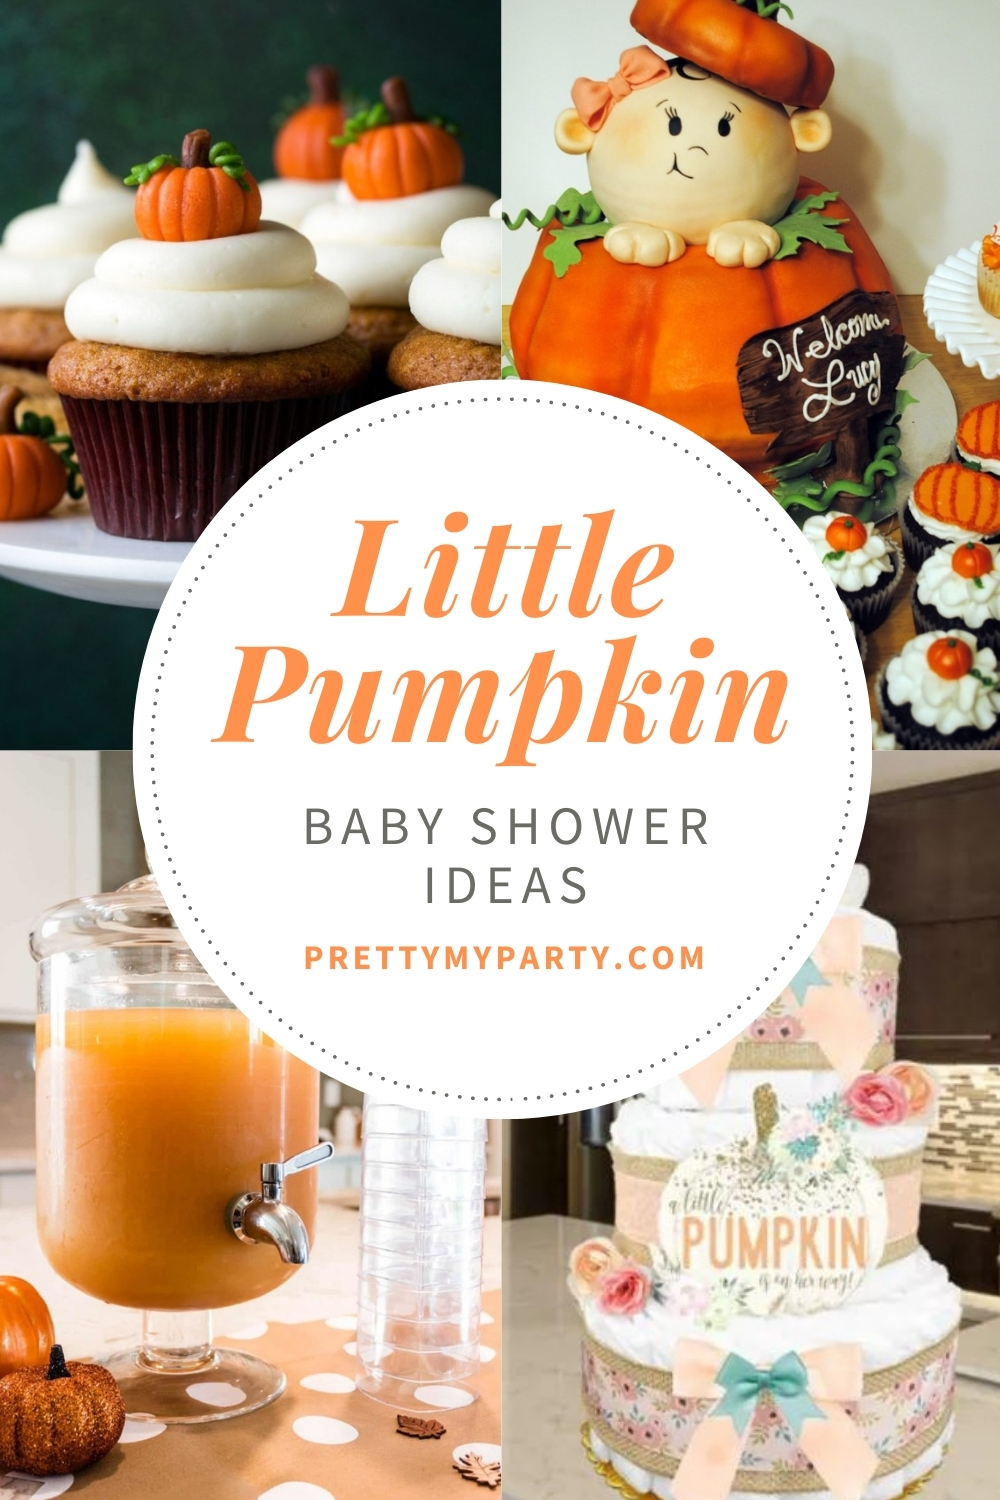 21 Little Pumpkin Baby Shower Ideas - Pretty My Party